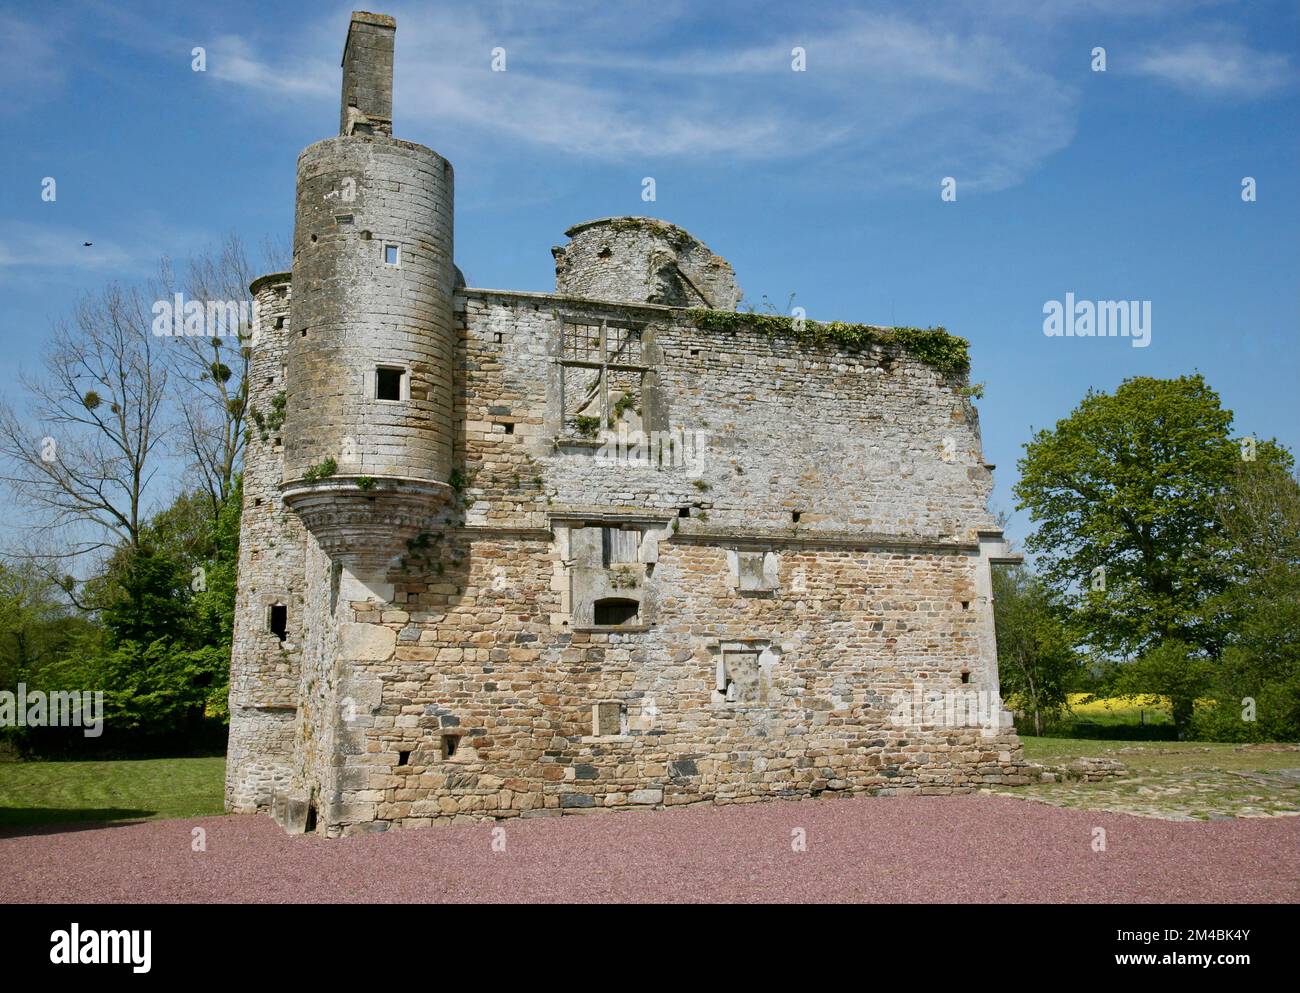 Inside the grounds of Chateau de Montfort, Saint-Lo, Normandy, France, Europe Stock Photo